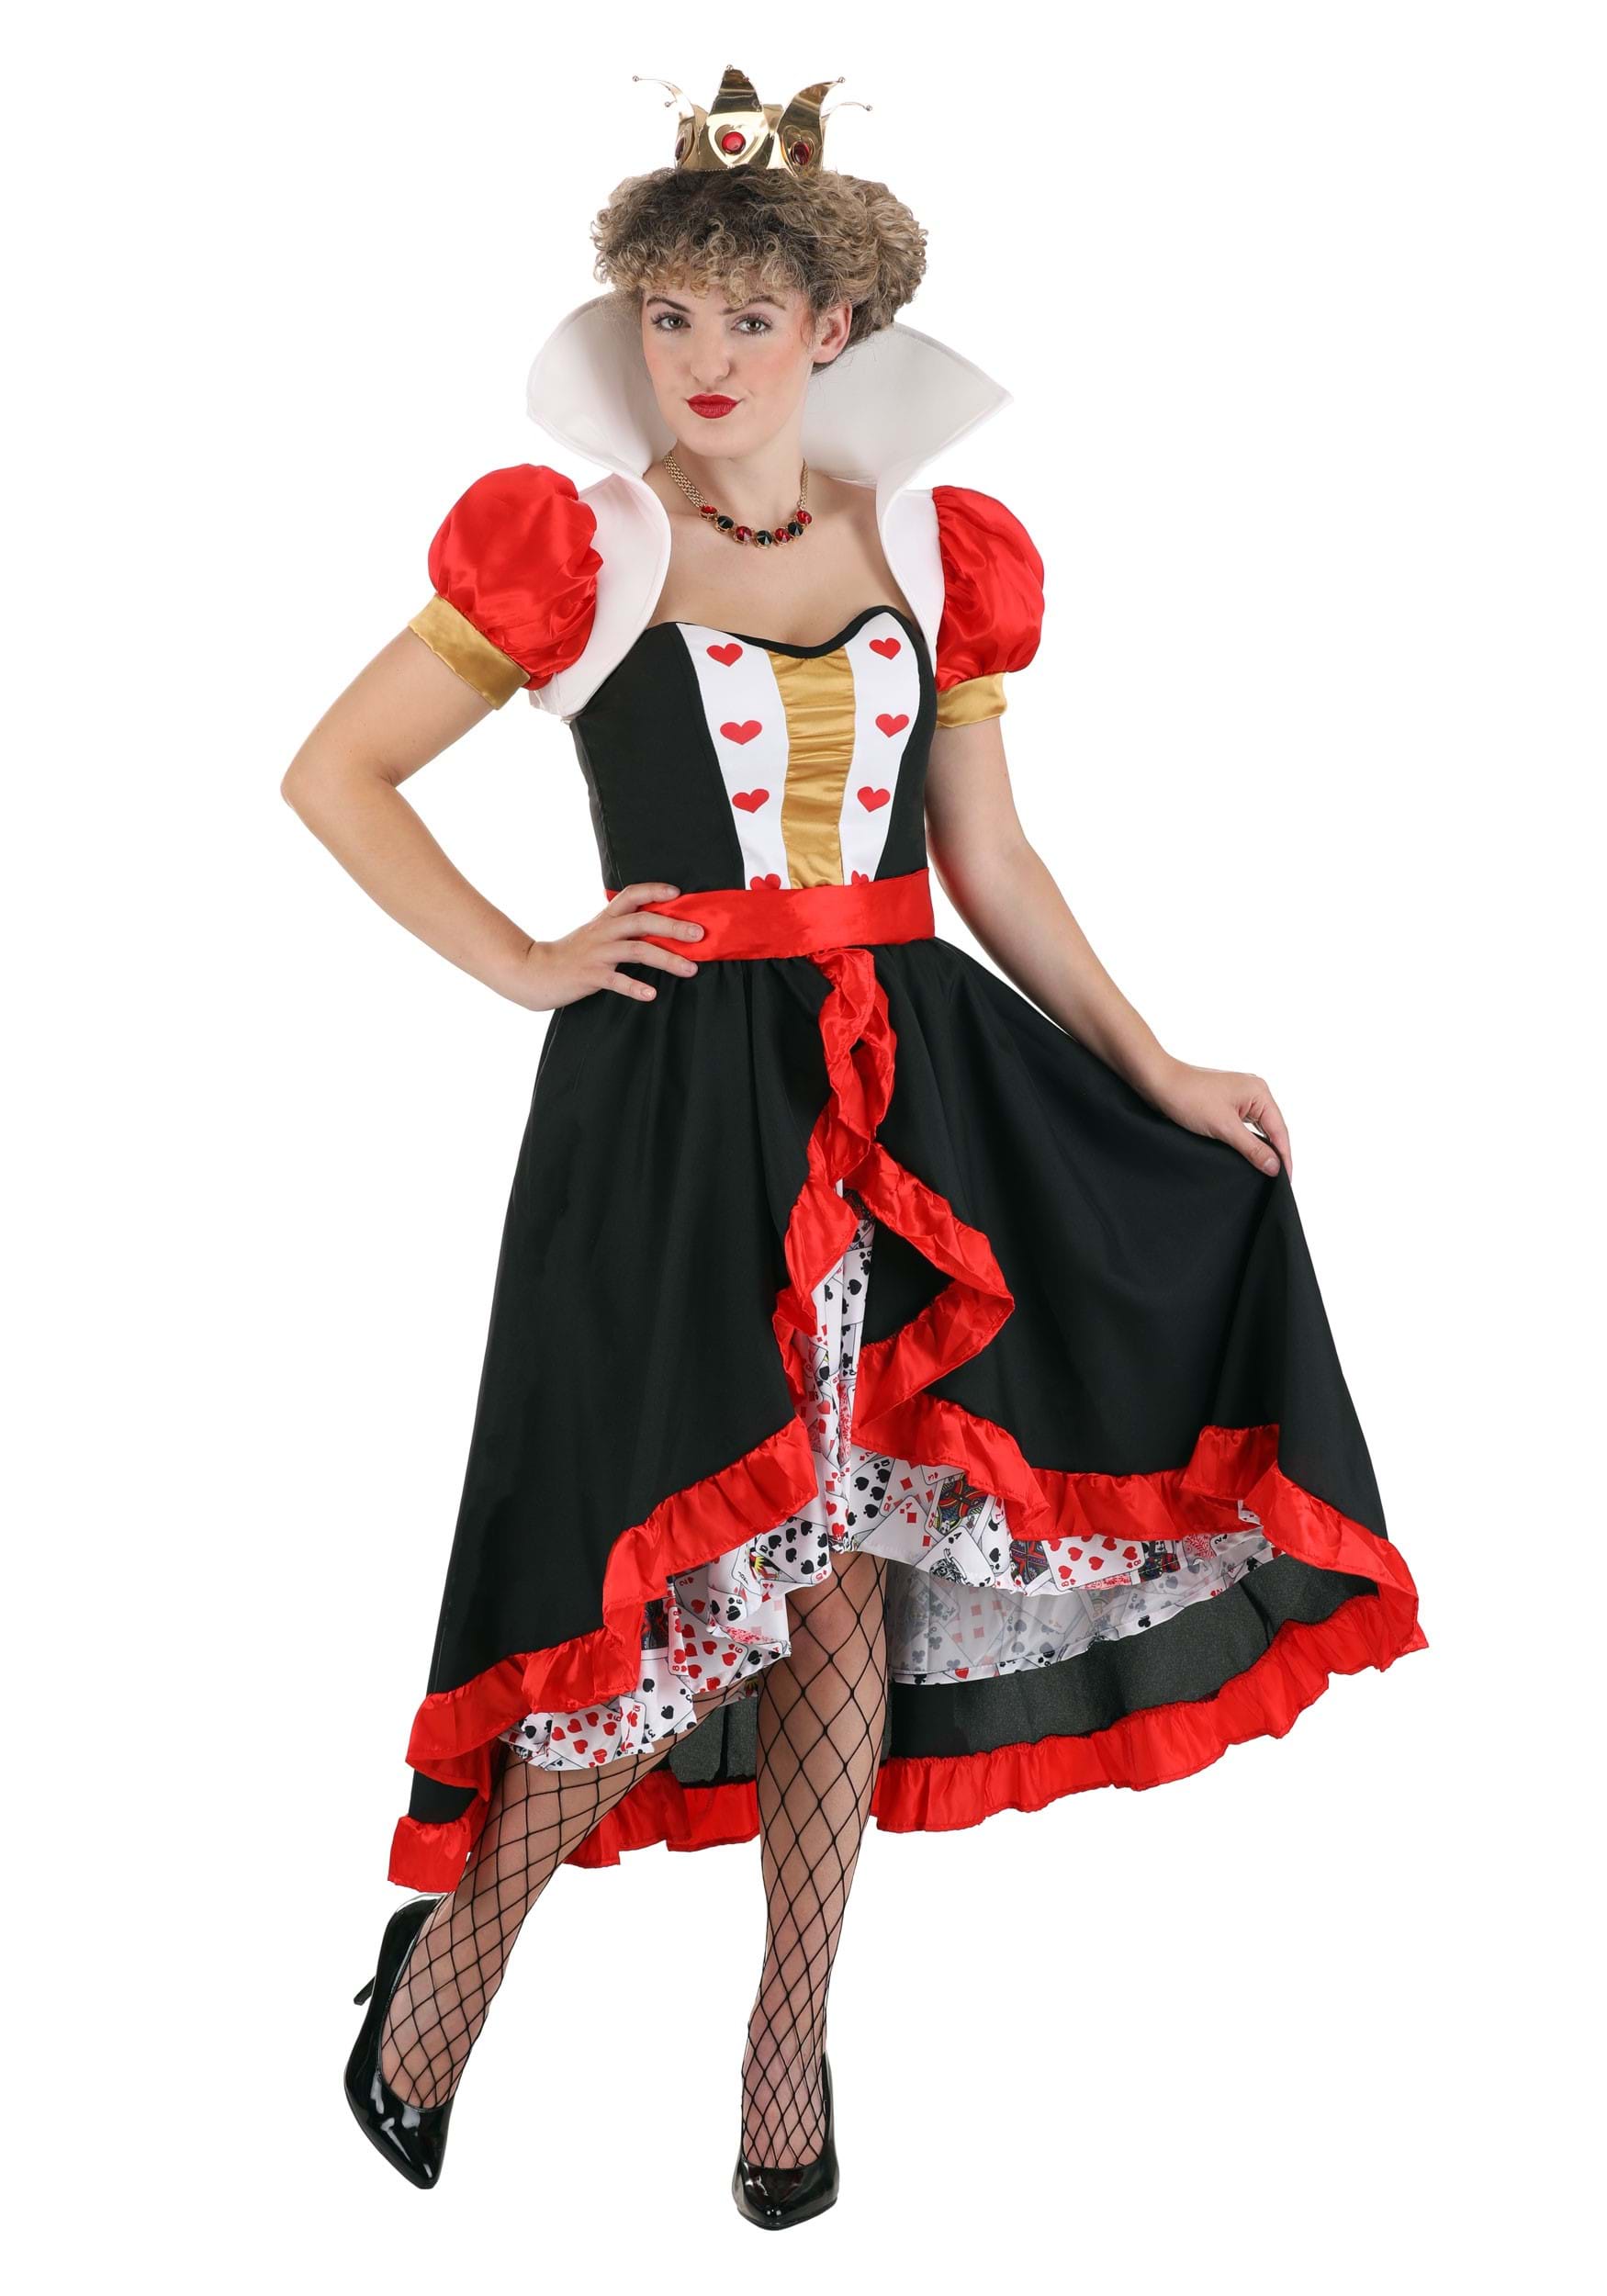 Flirty Queen of Hearts Costume for Women